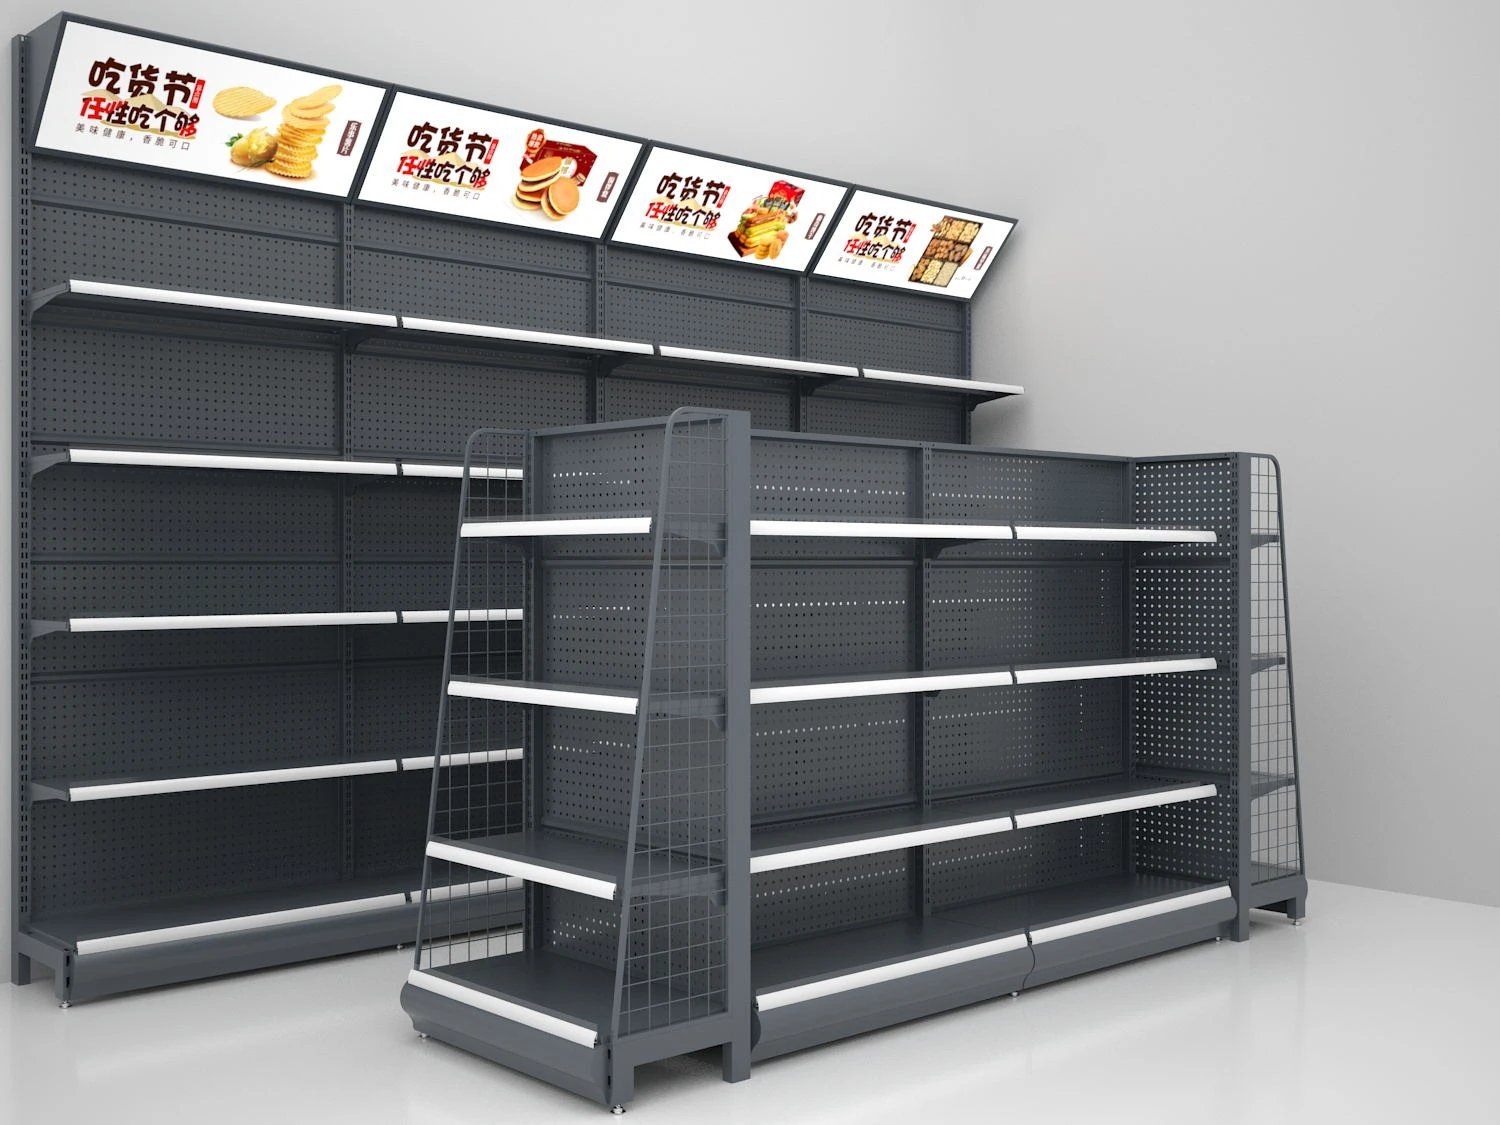 supermarket shelves wisda commercial factory price display racks and shelves rack stand market dish design shelf gondola